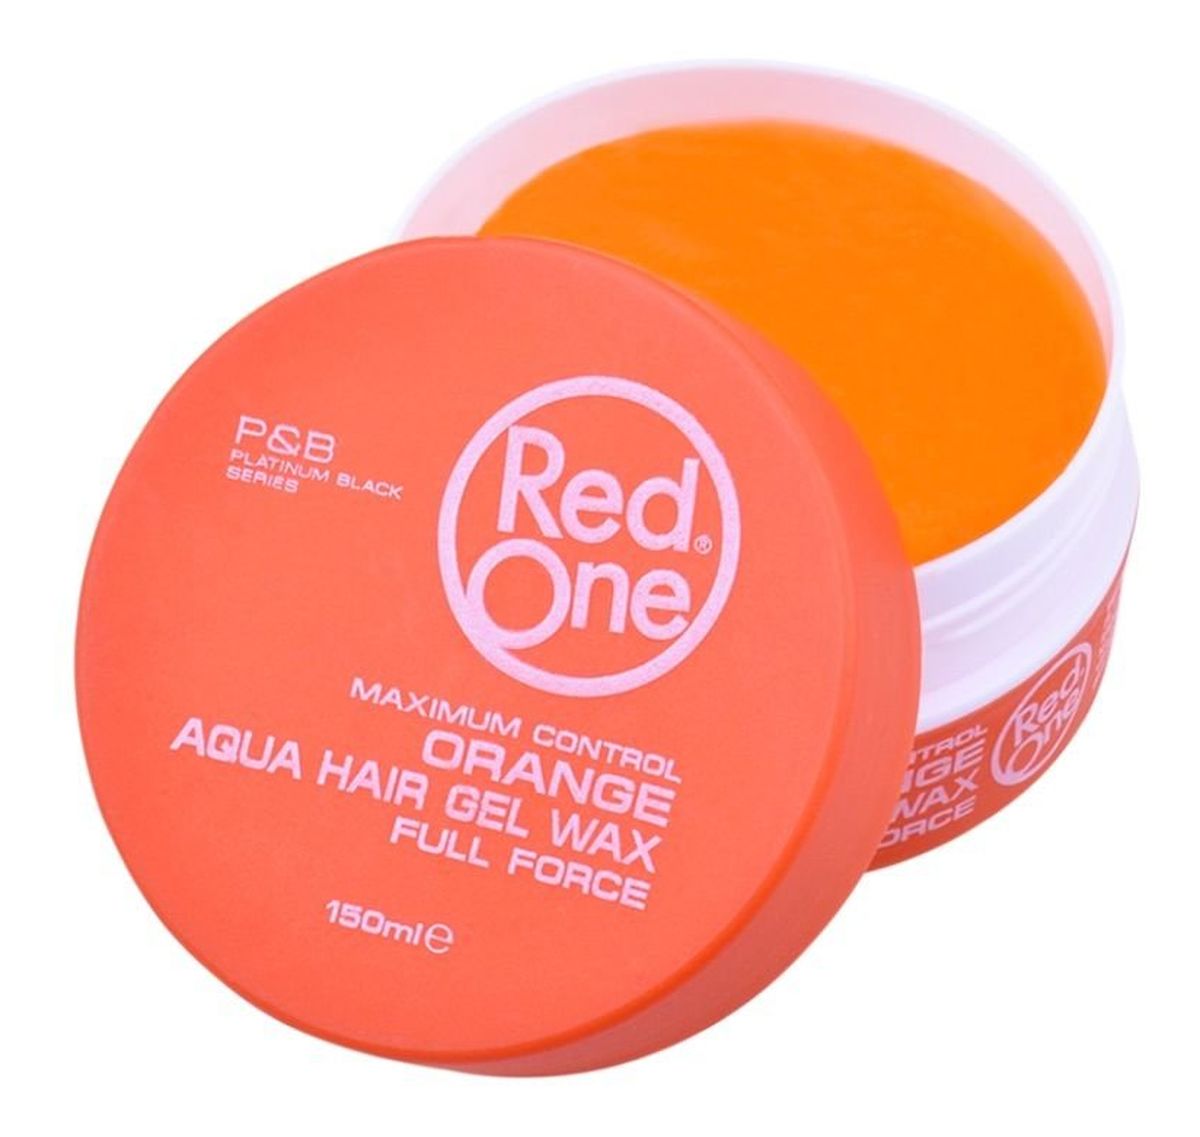 Aqua hair gel wax full force wosk do włosów orange